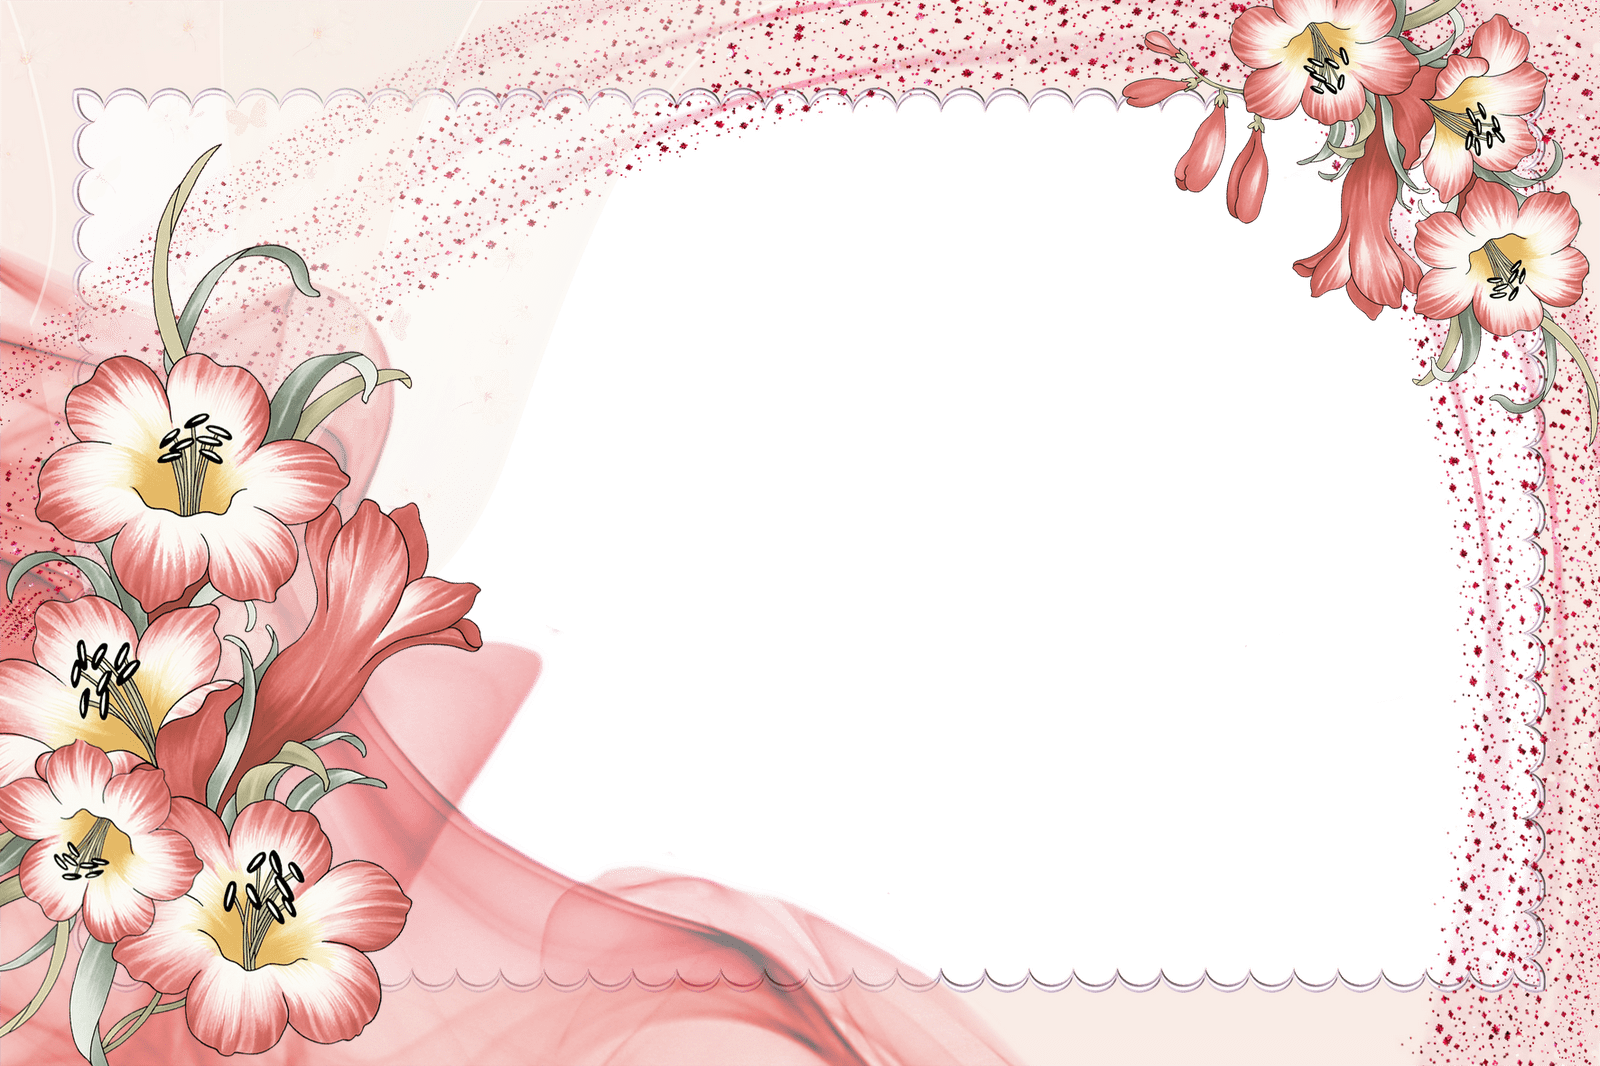 Flower Frame Wallpapers - Top Free Flower Frame Backgrounds ...